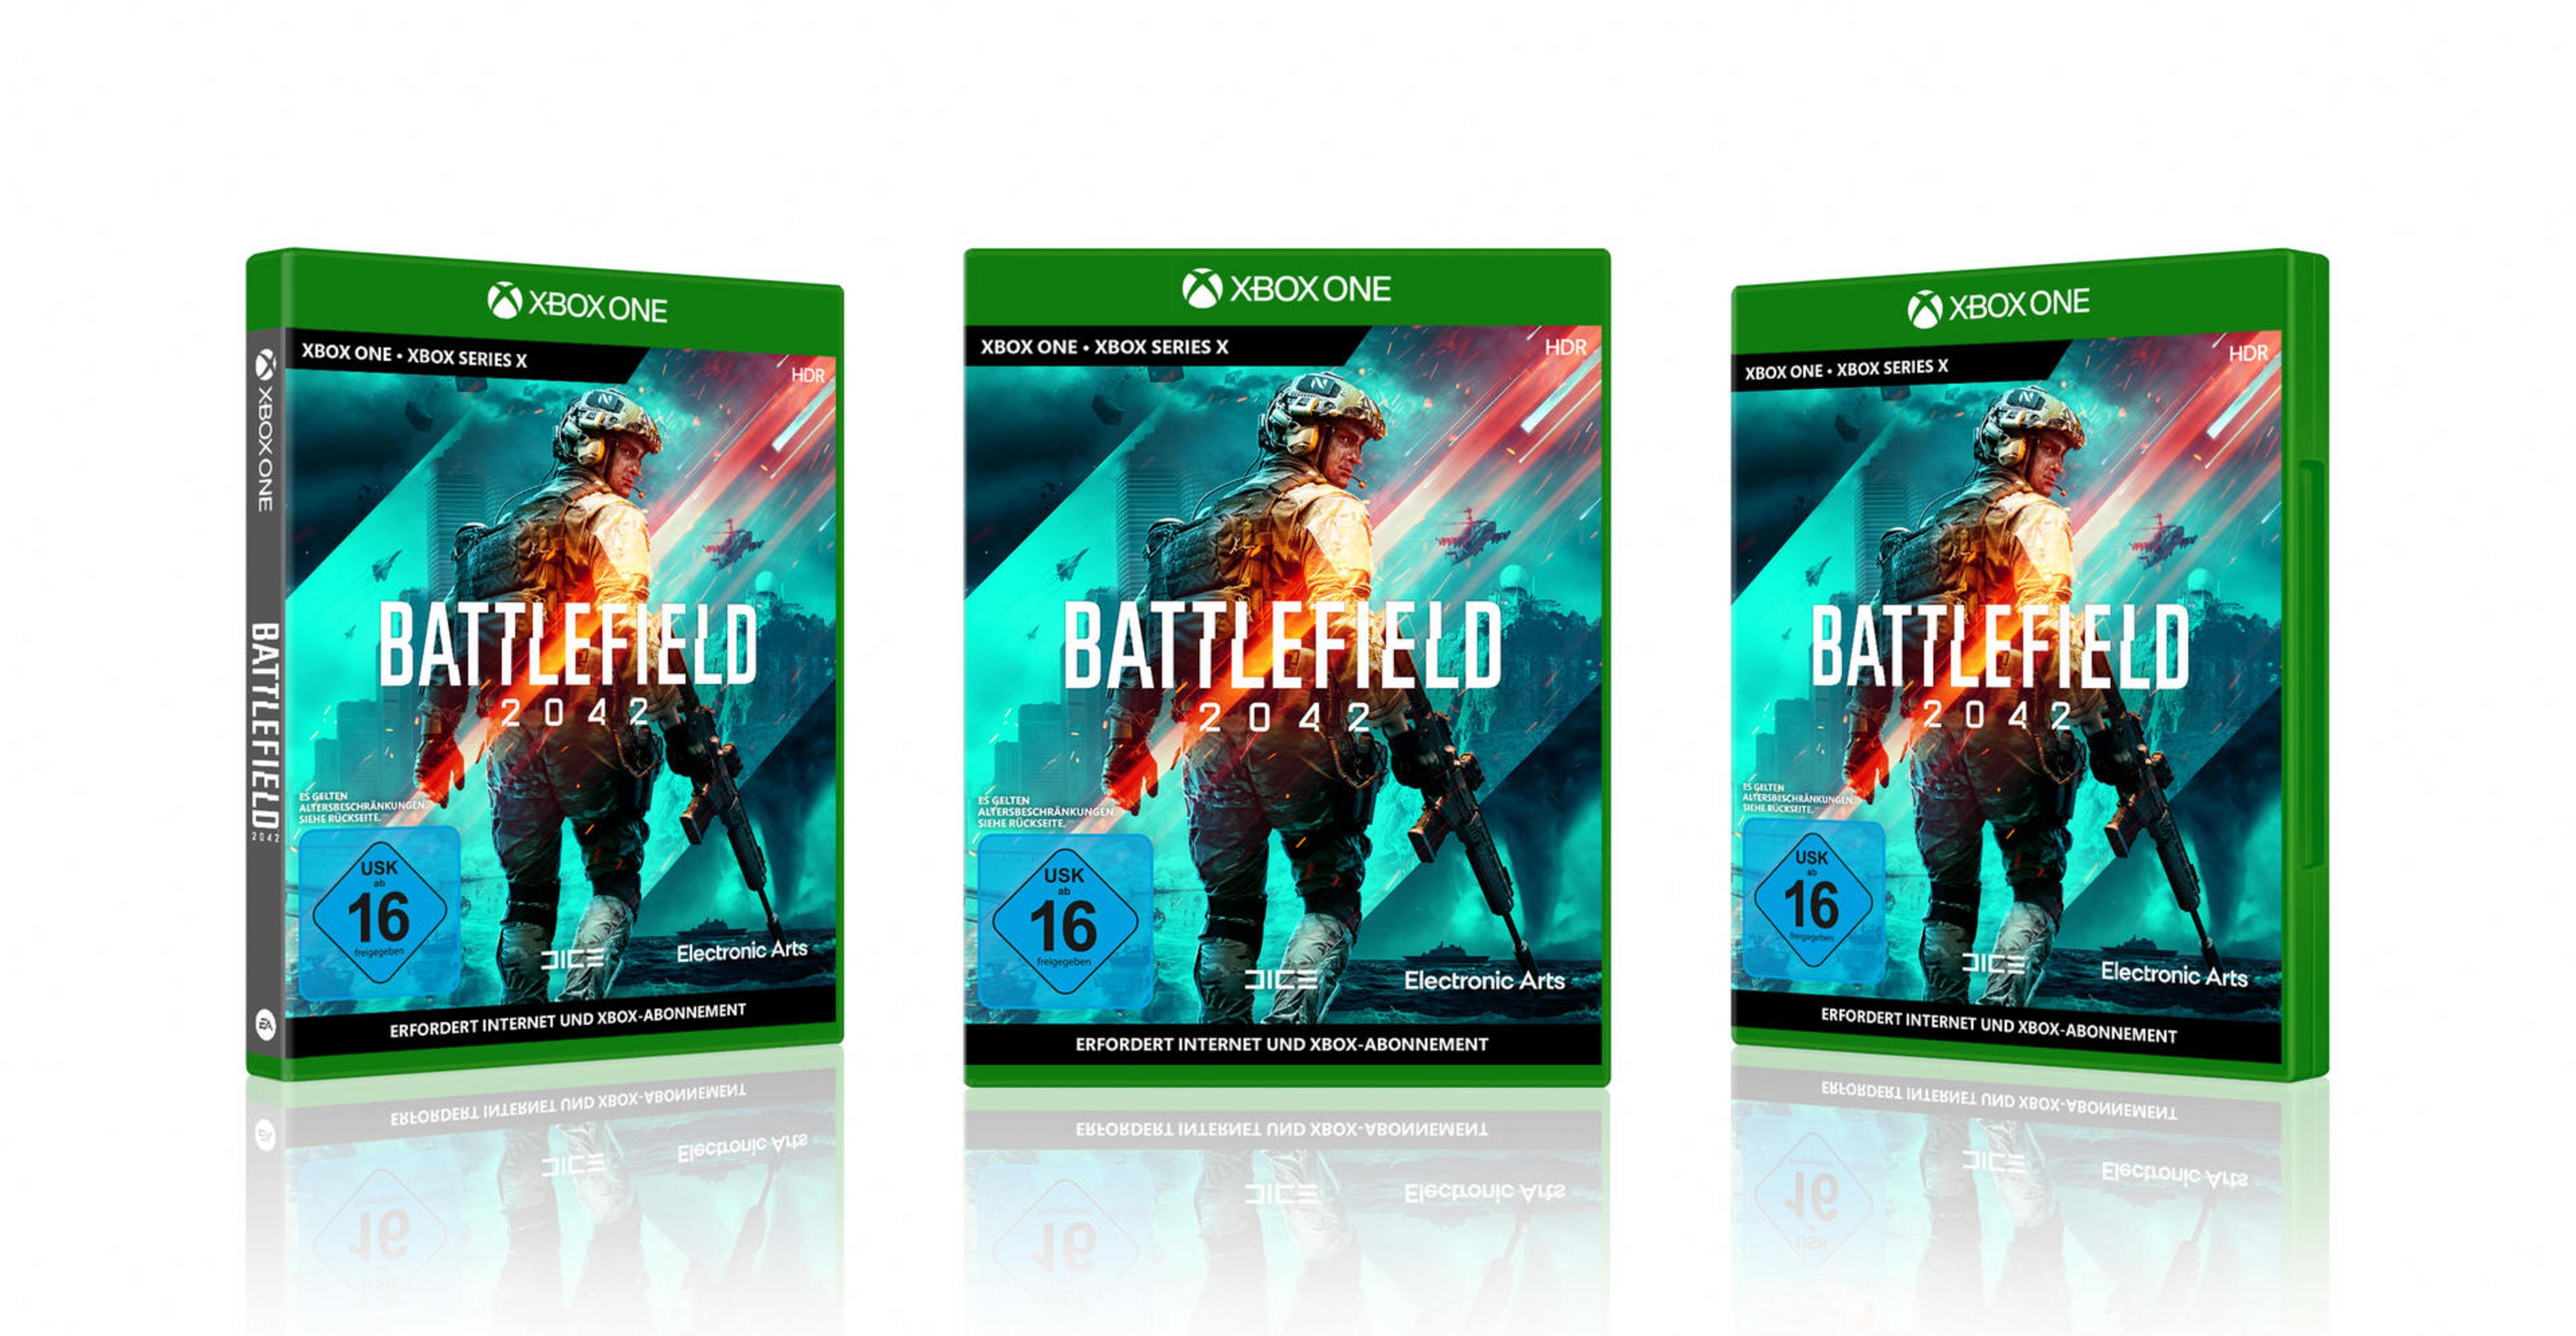 [Xbox - One] 2042 Battlefield